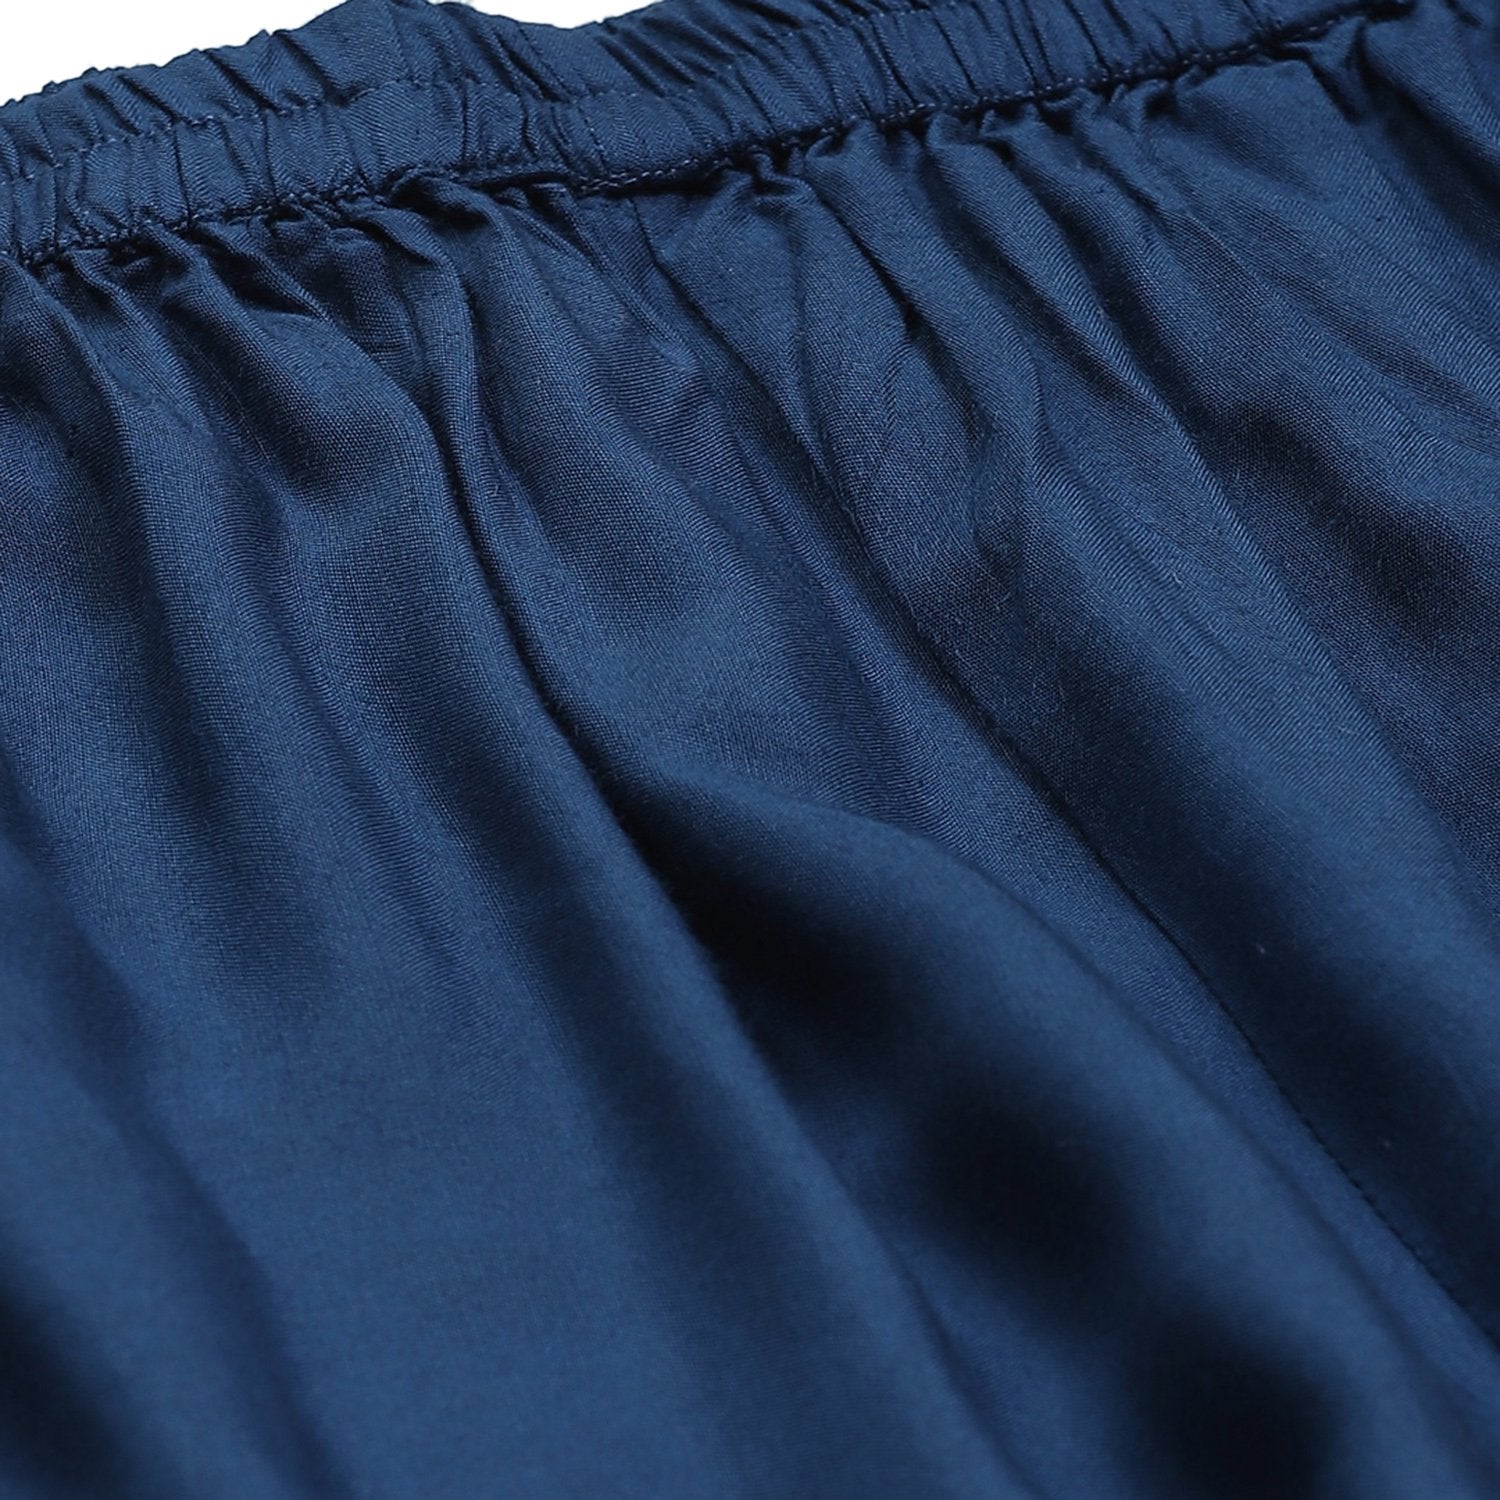 Women's Blue Cotton Solid Casual Trouser - Myshka